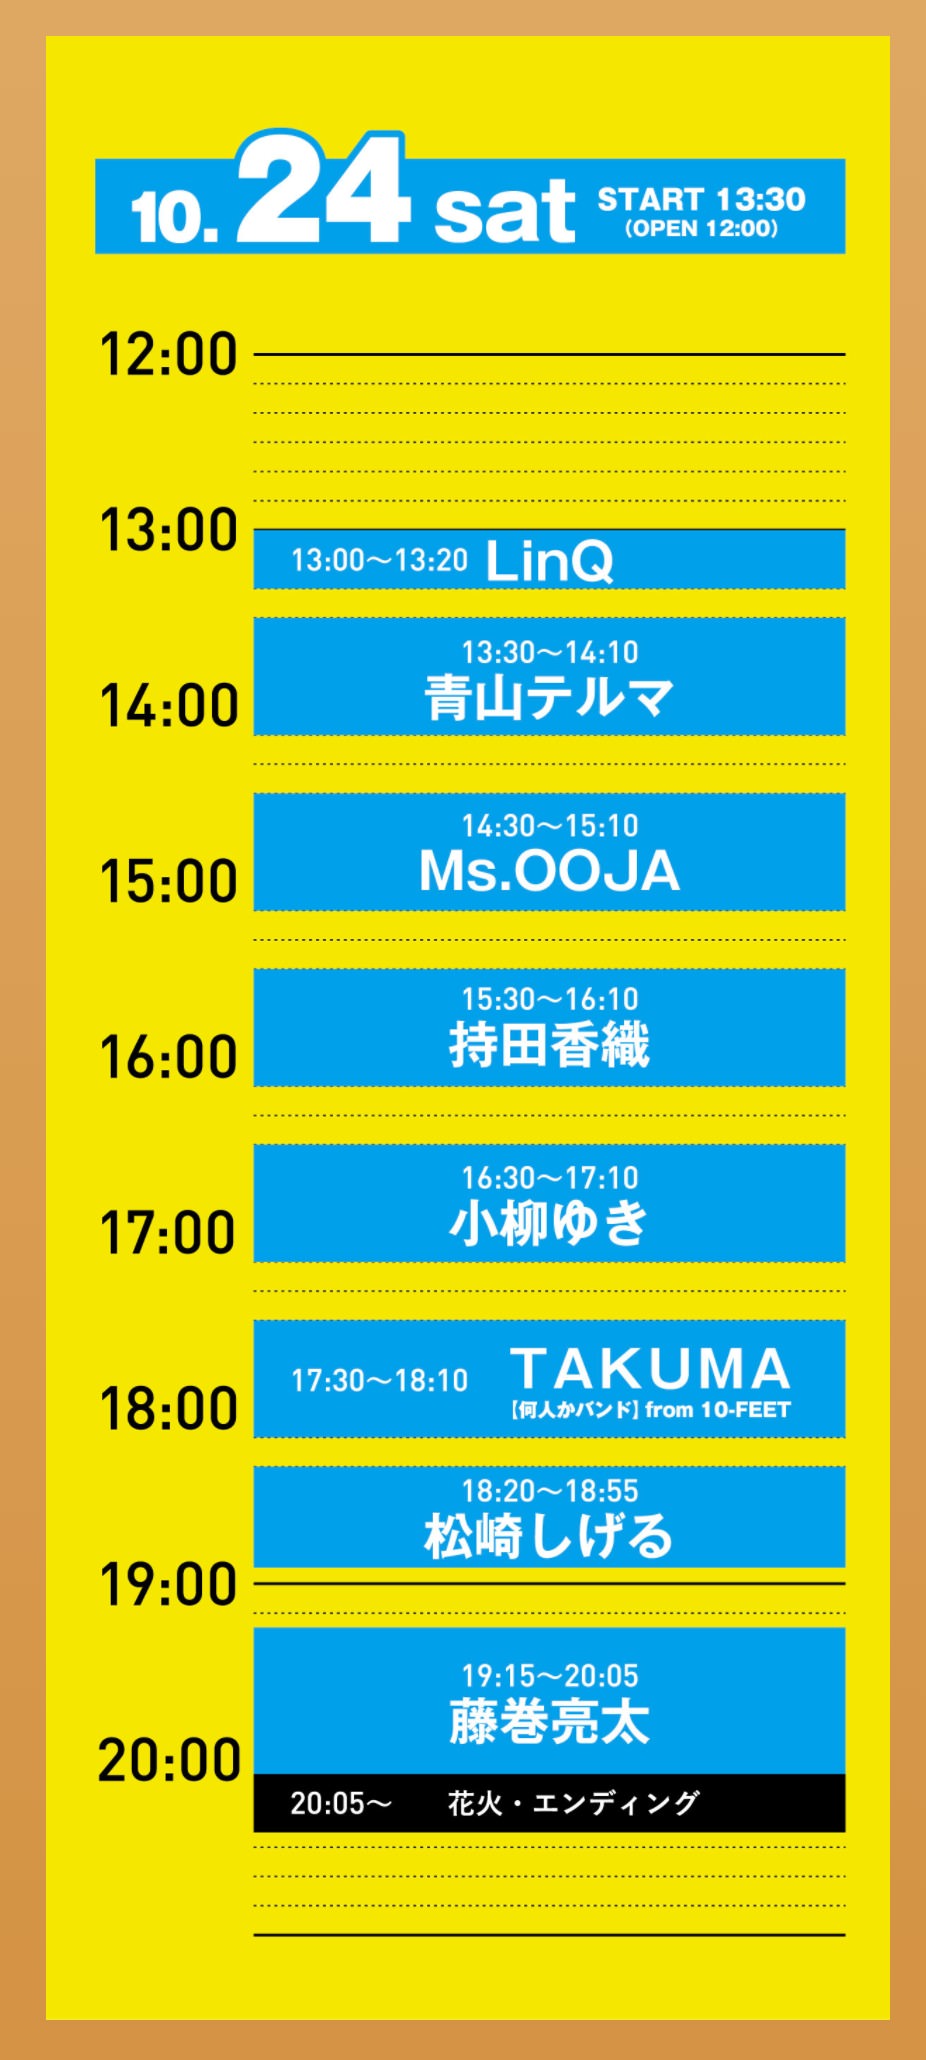 「MONOGATARI LIVE 2020」のタイムスケジュール（10月24日）